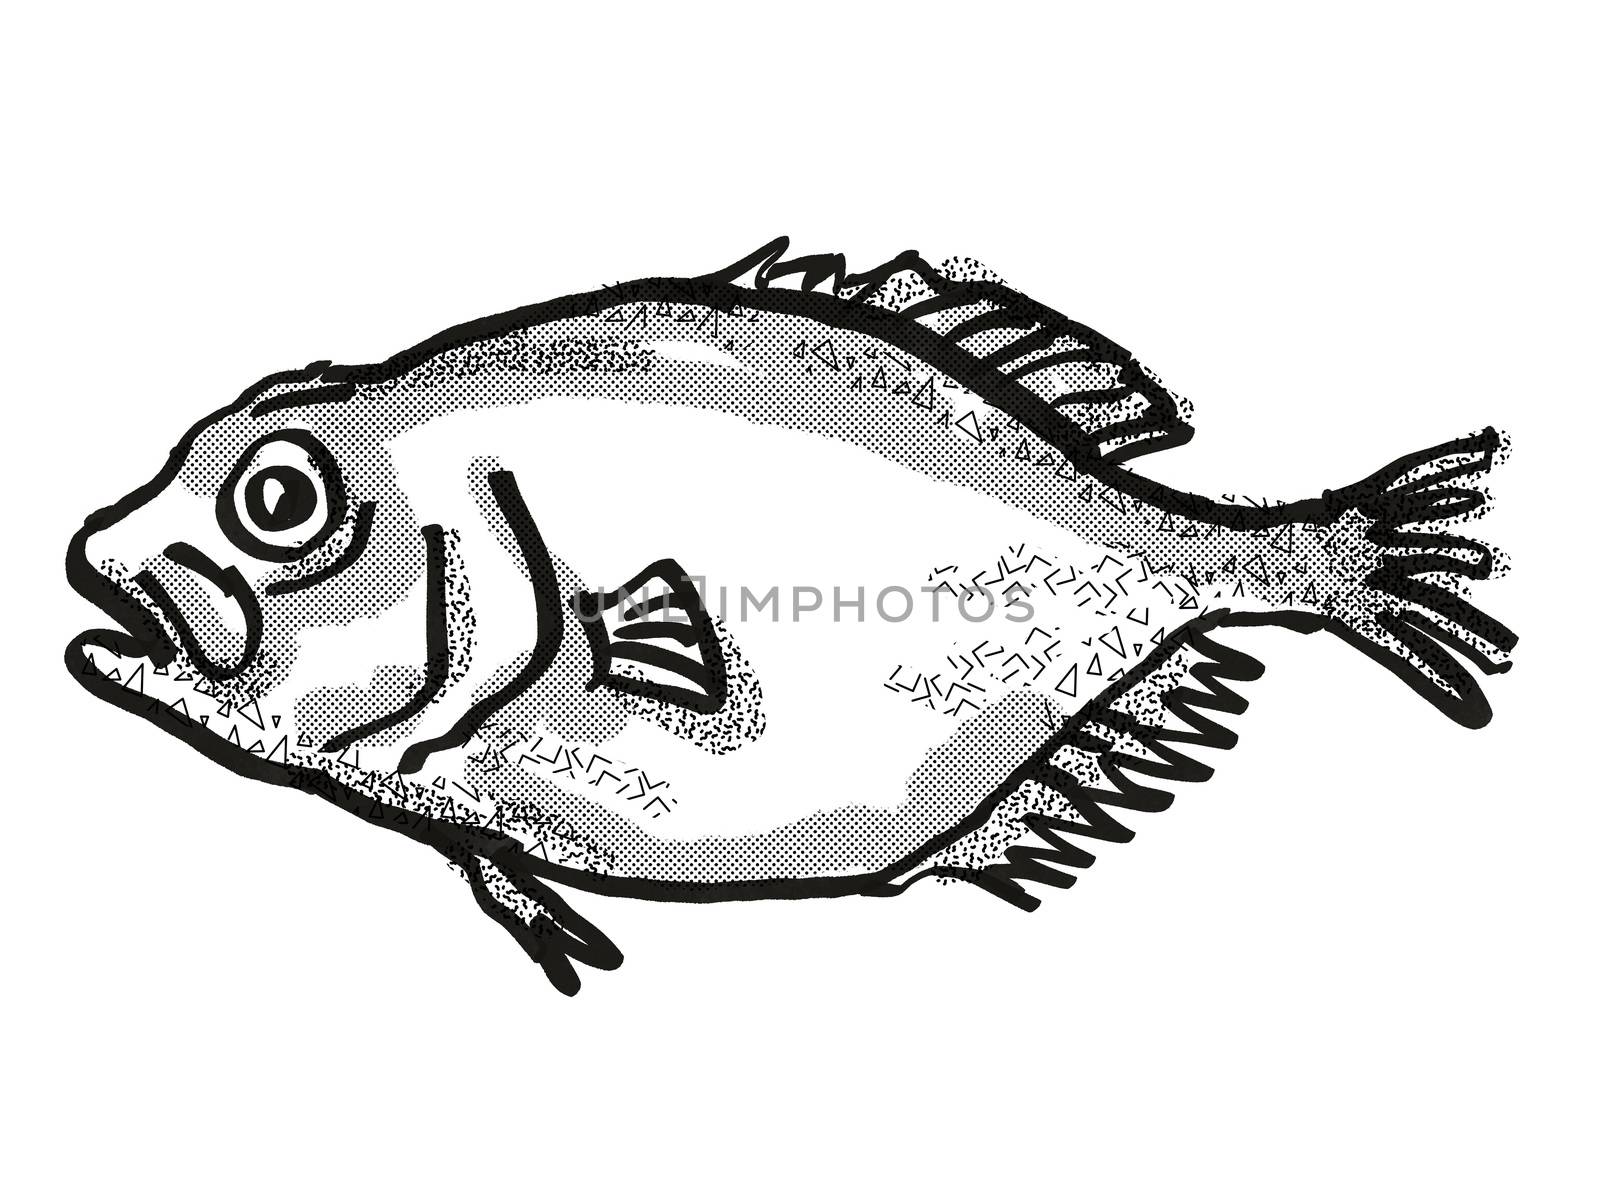  orange roughy New Zealand Fish Cartoon Retro Drawing by patrimonio